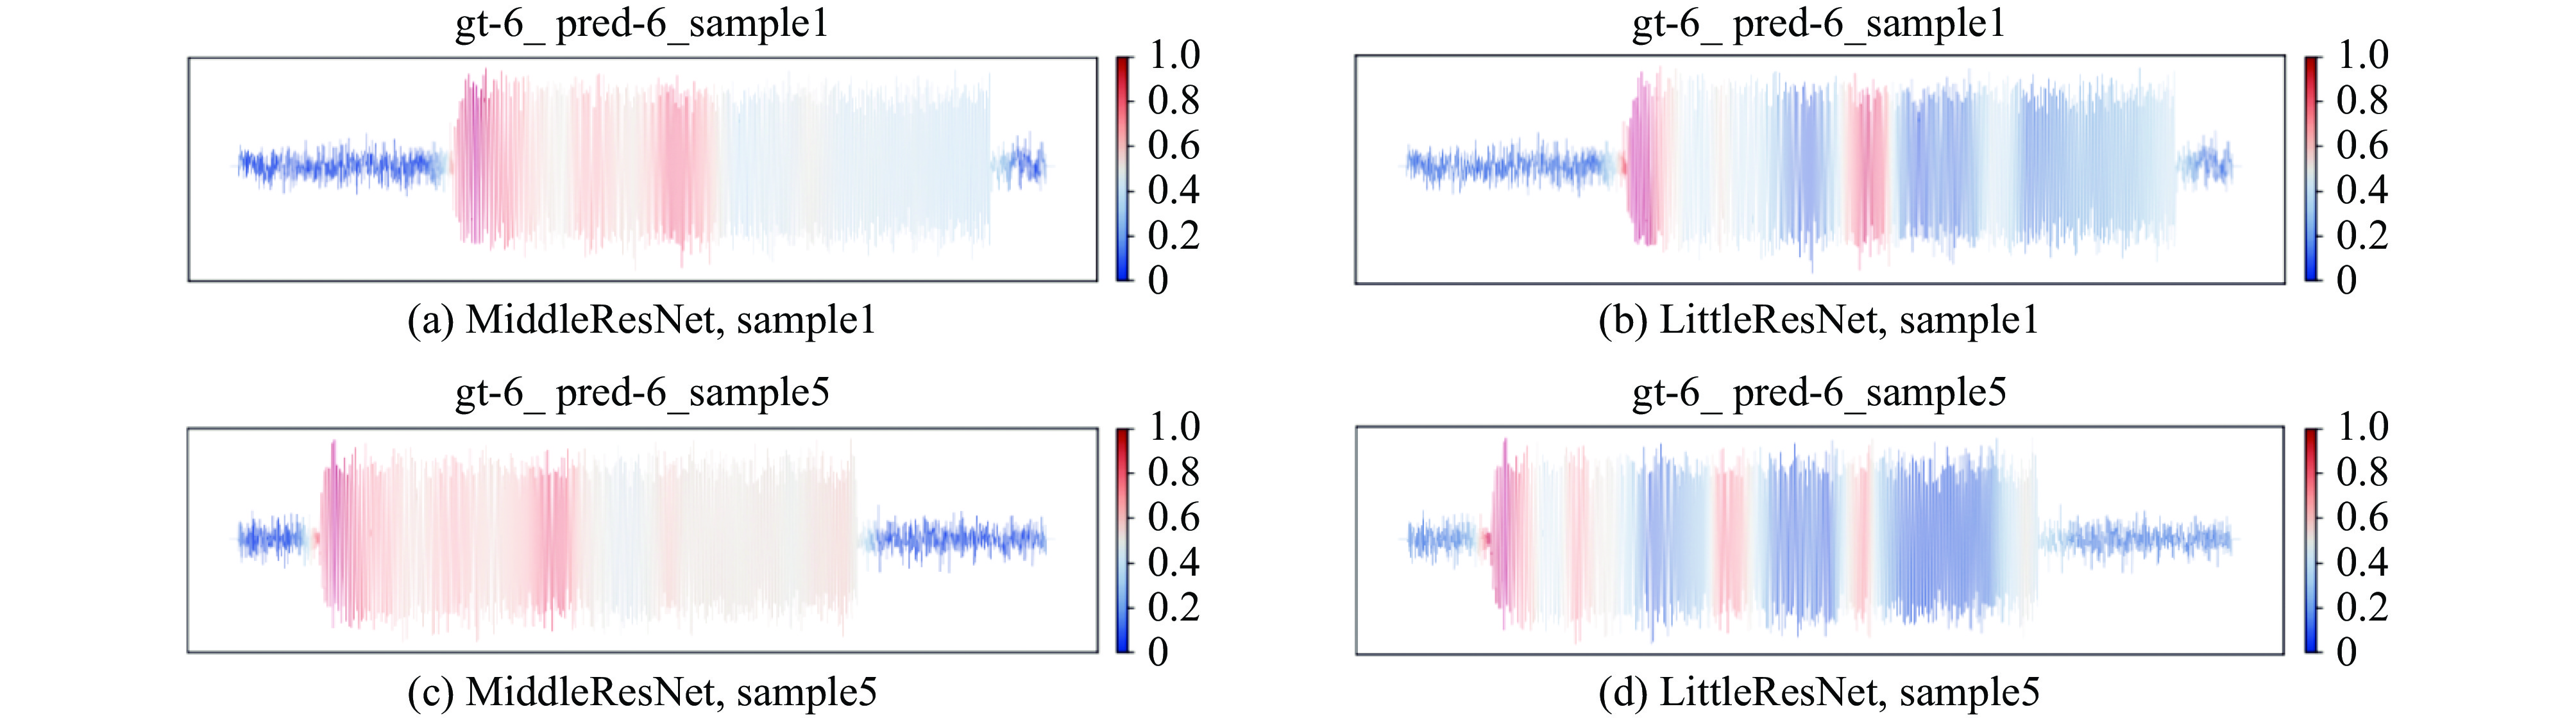 Comparison of time-domain pulse signal heat maps between MiddleResNet and LittleResNet